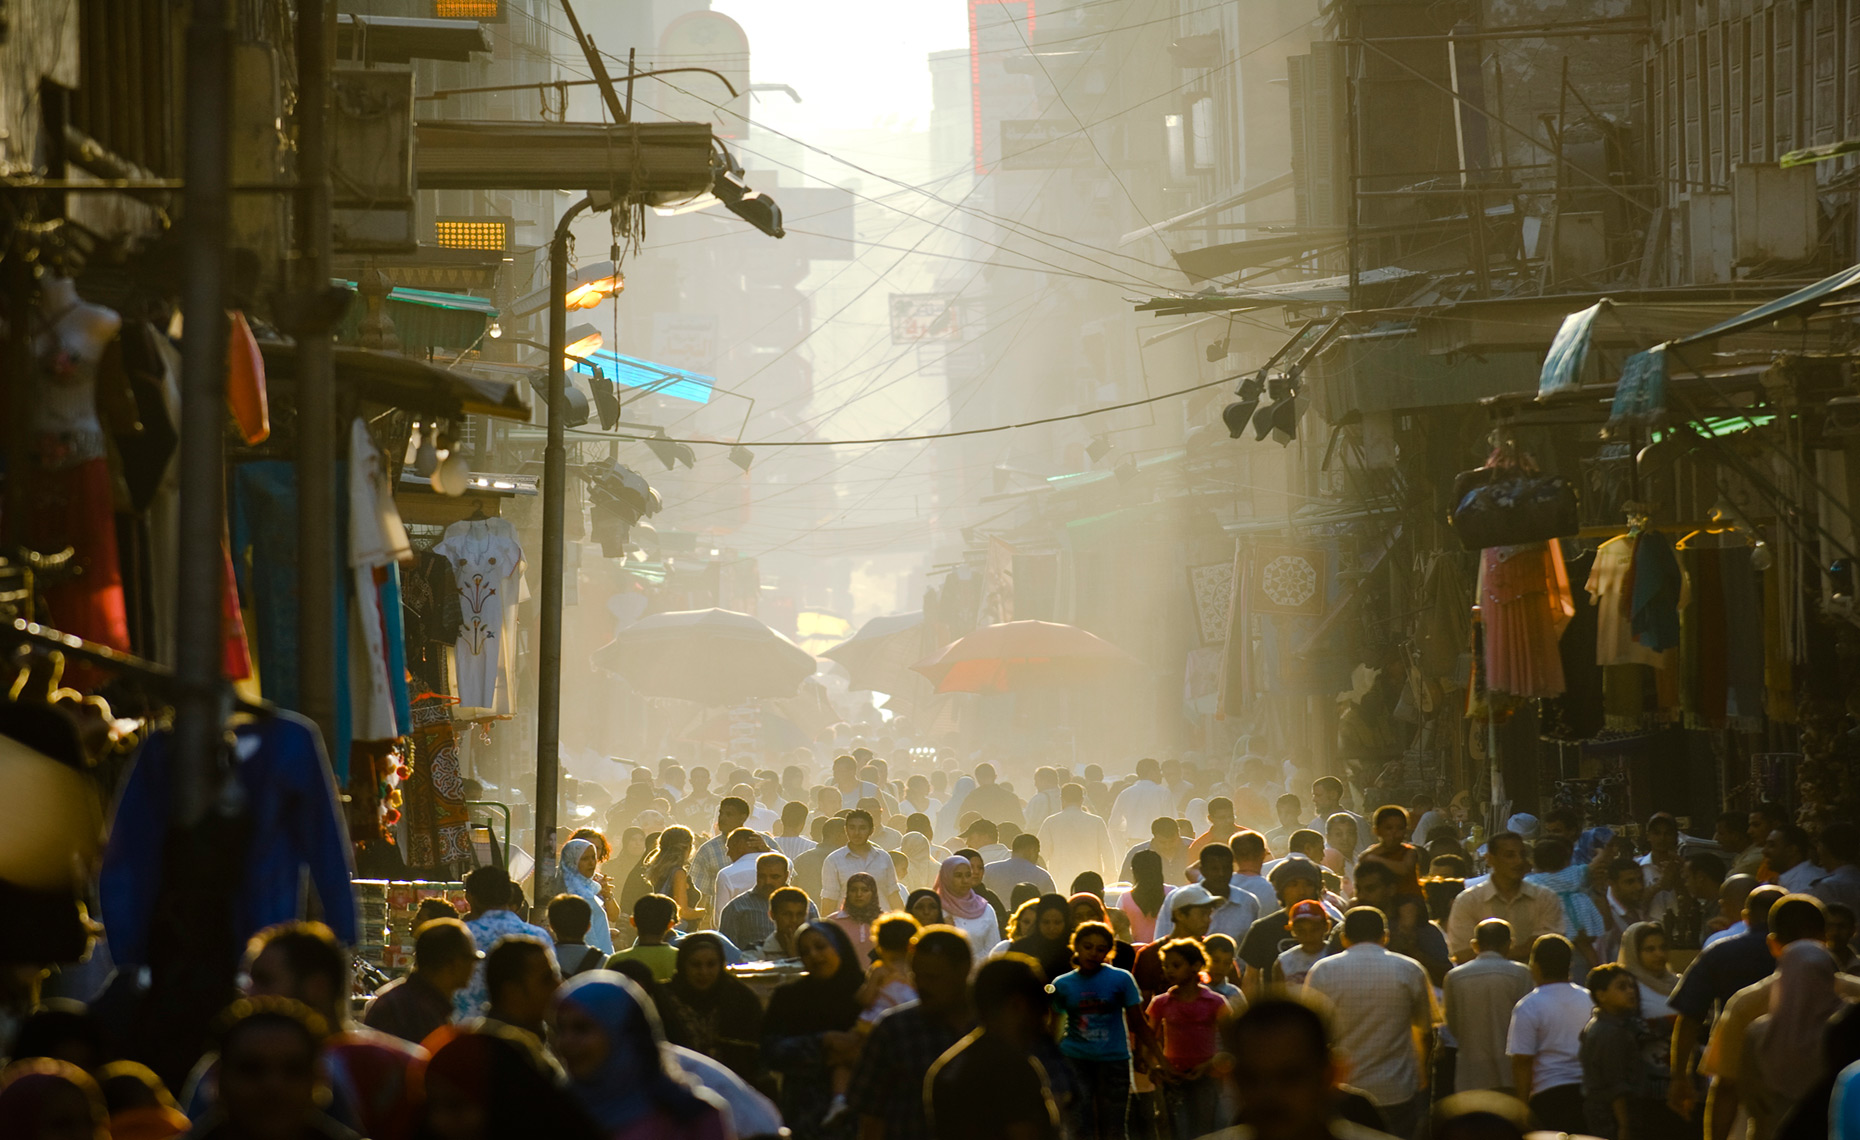 khan-cairo-egypt-marketplace-crowd-travel.jpg